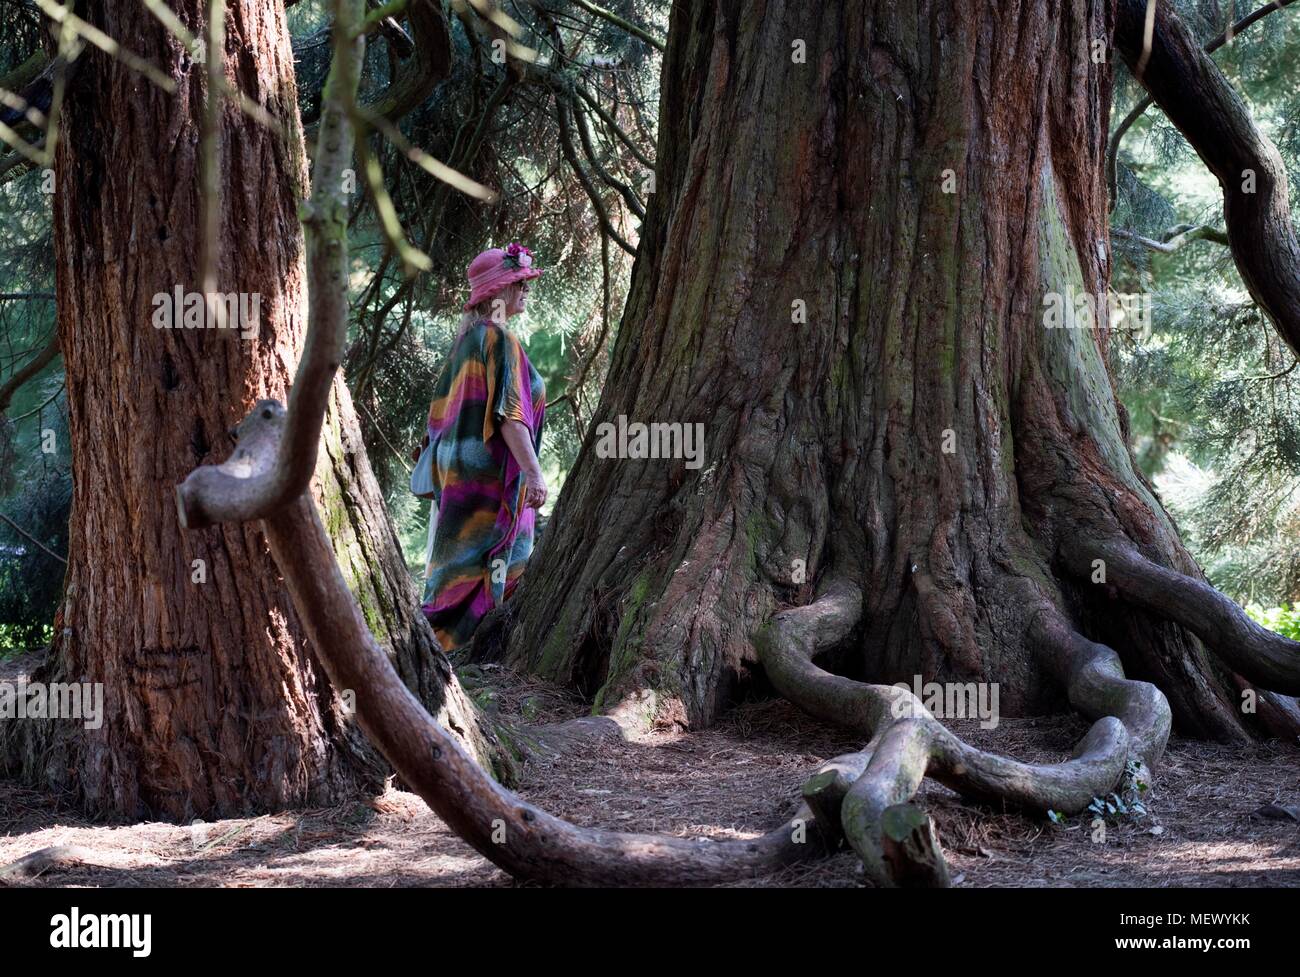 Botanischer Garten der Universität Cambridge, Cambridge, Cambridgeshire England UK. Frau geht Vergangenheit Sierra Redwood Tree. Sequoiadendron Giganteum. 22. April 20. Stockfoto